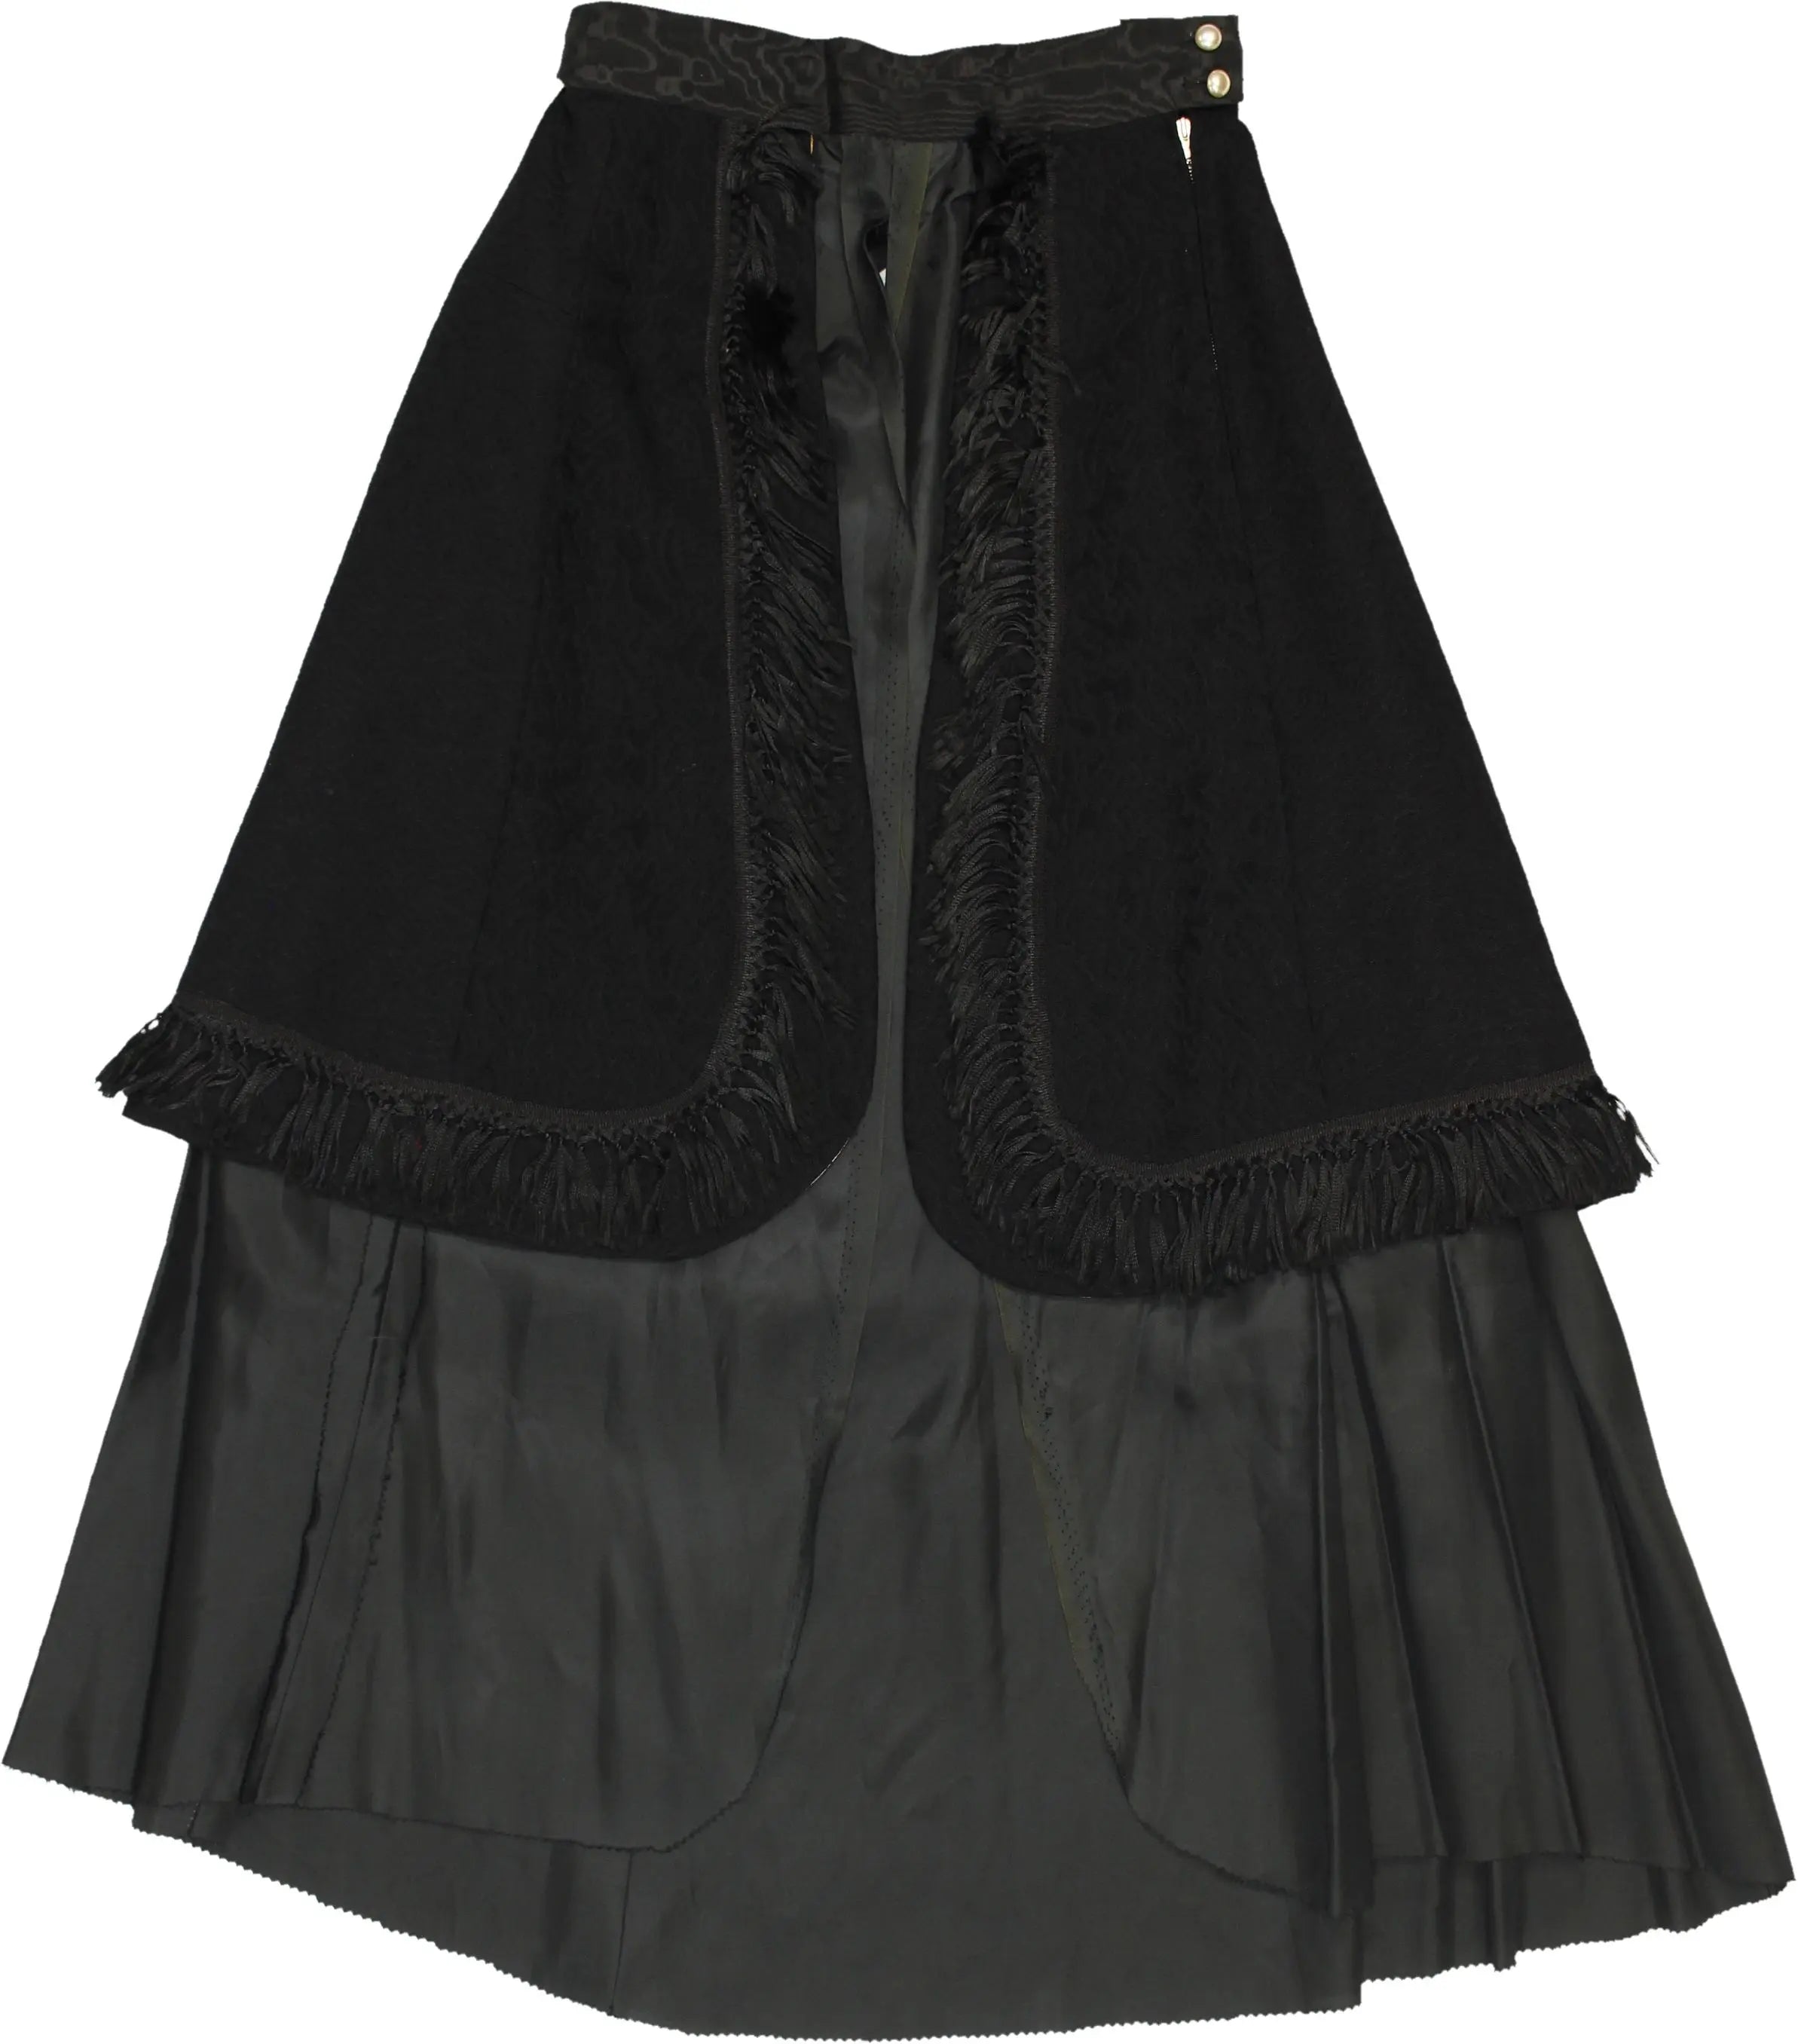 Handmade - Handmade Unique Black Skirt- ThriftTale.com - Vintage and second handclothing